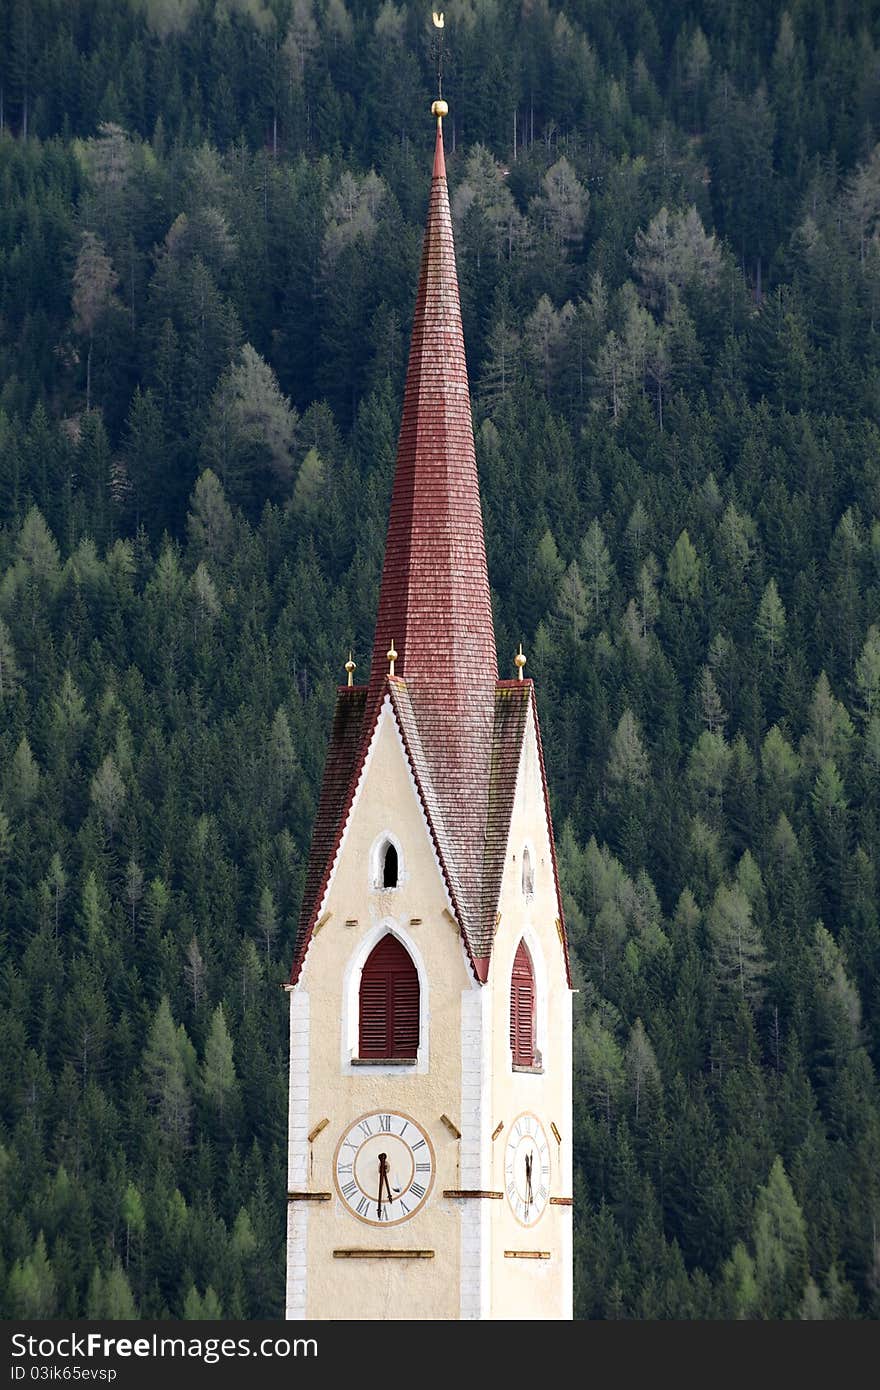 Church in the forest, trentino alto adige, italy